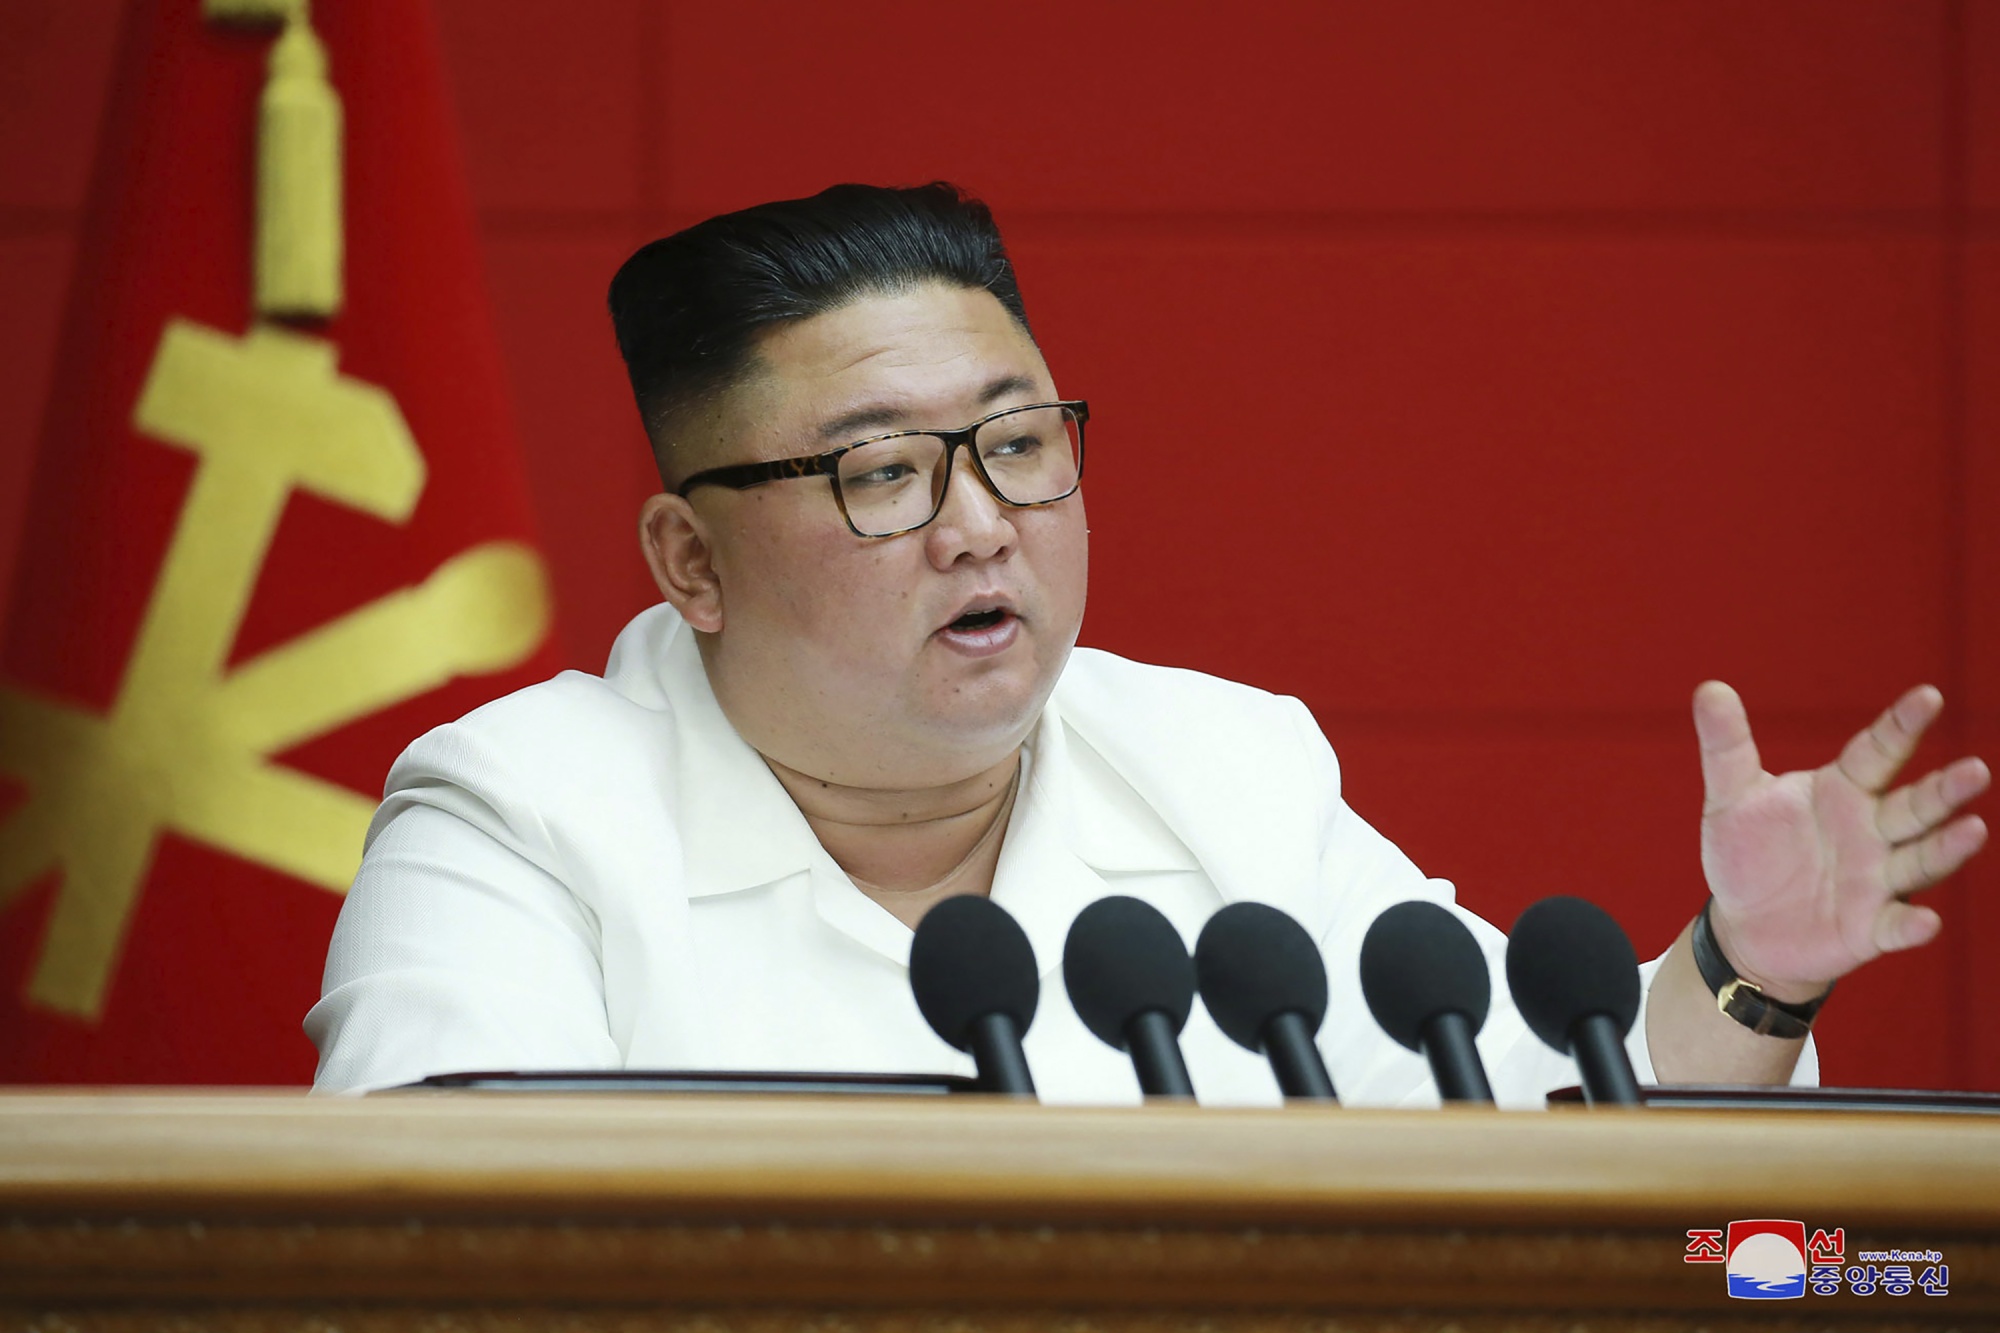 Kim Jong Un speaks during a plenary meeting in Pyongyang, Aug. 19.